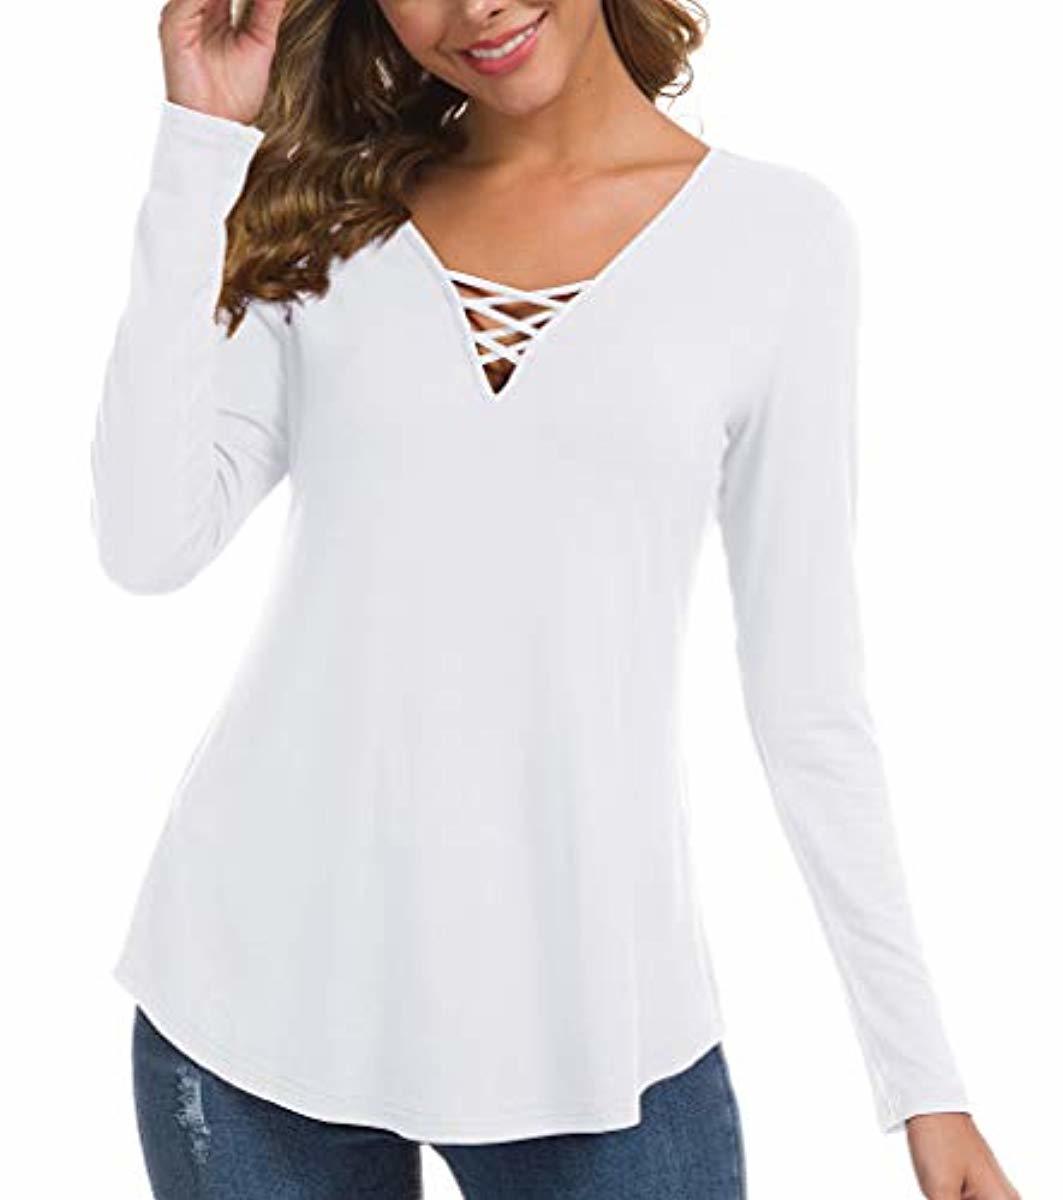 Women's Fall Long Sleeve V-Neck T-Shirt Tunic Tops Criss Cross Casual Blouse Shirts